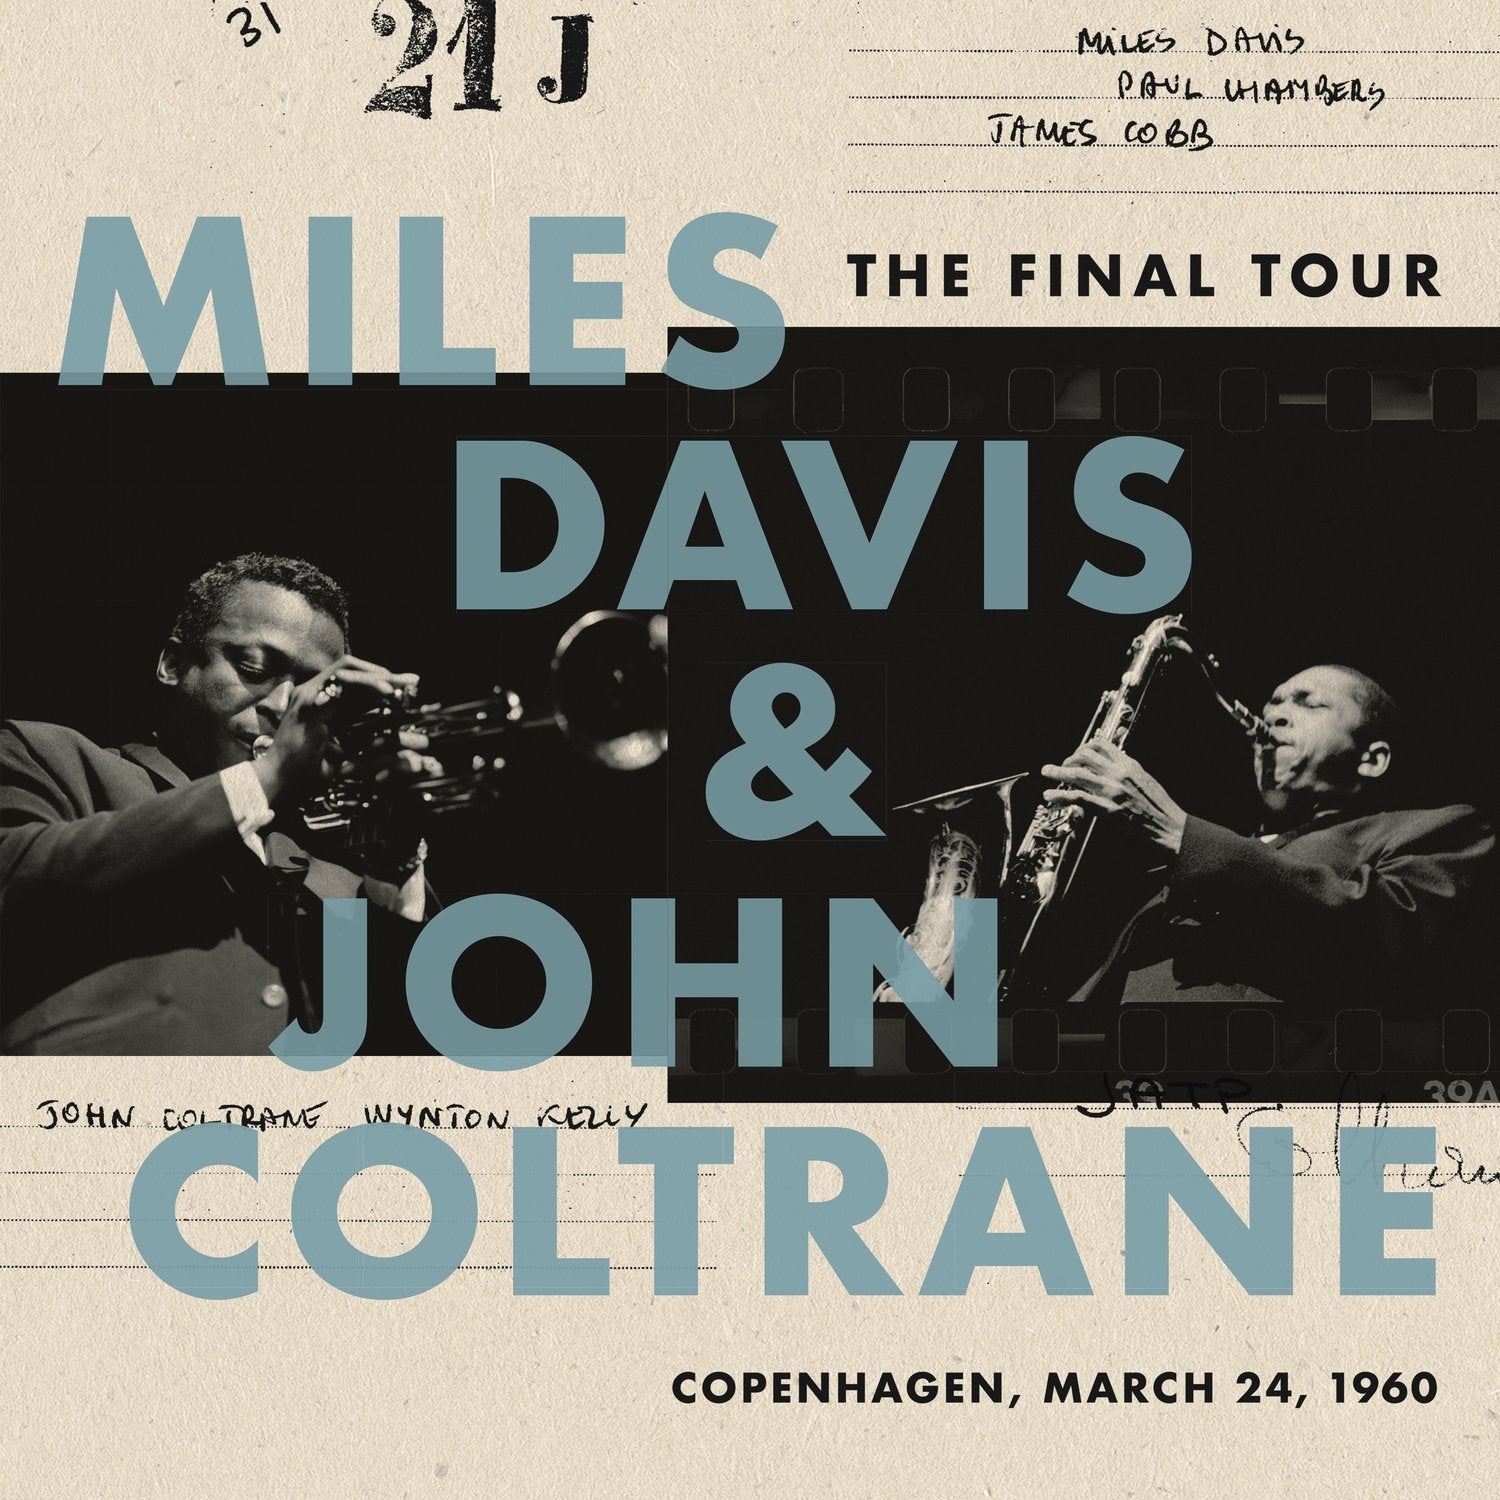 Miles Davis & John Coltrane - The Final Tour (Copenhagen, March 24, 1960) - New Vinyl Lp 2018 Columbia Pressing - Jazz